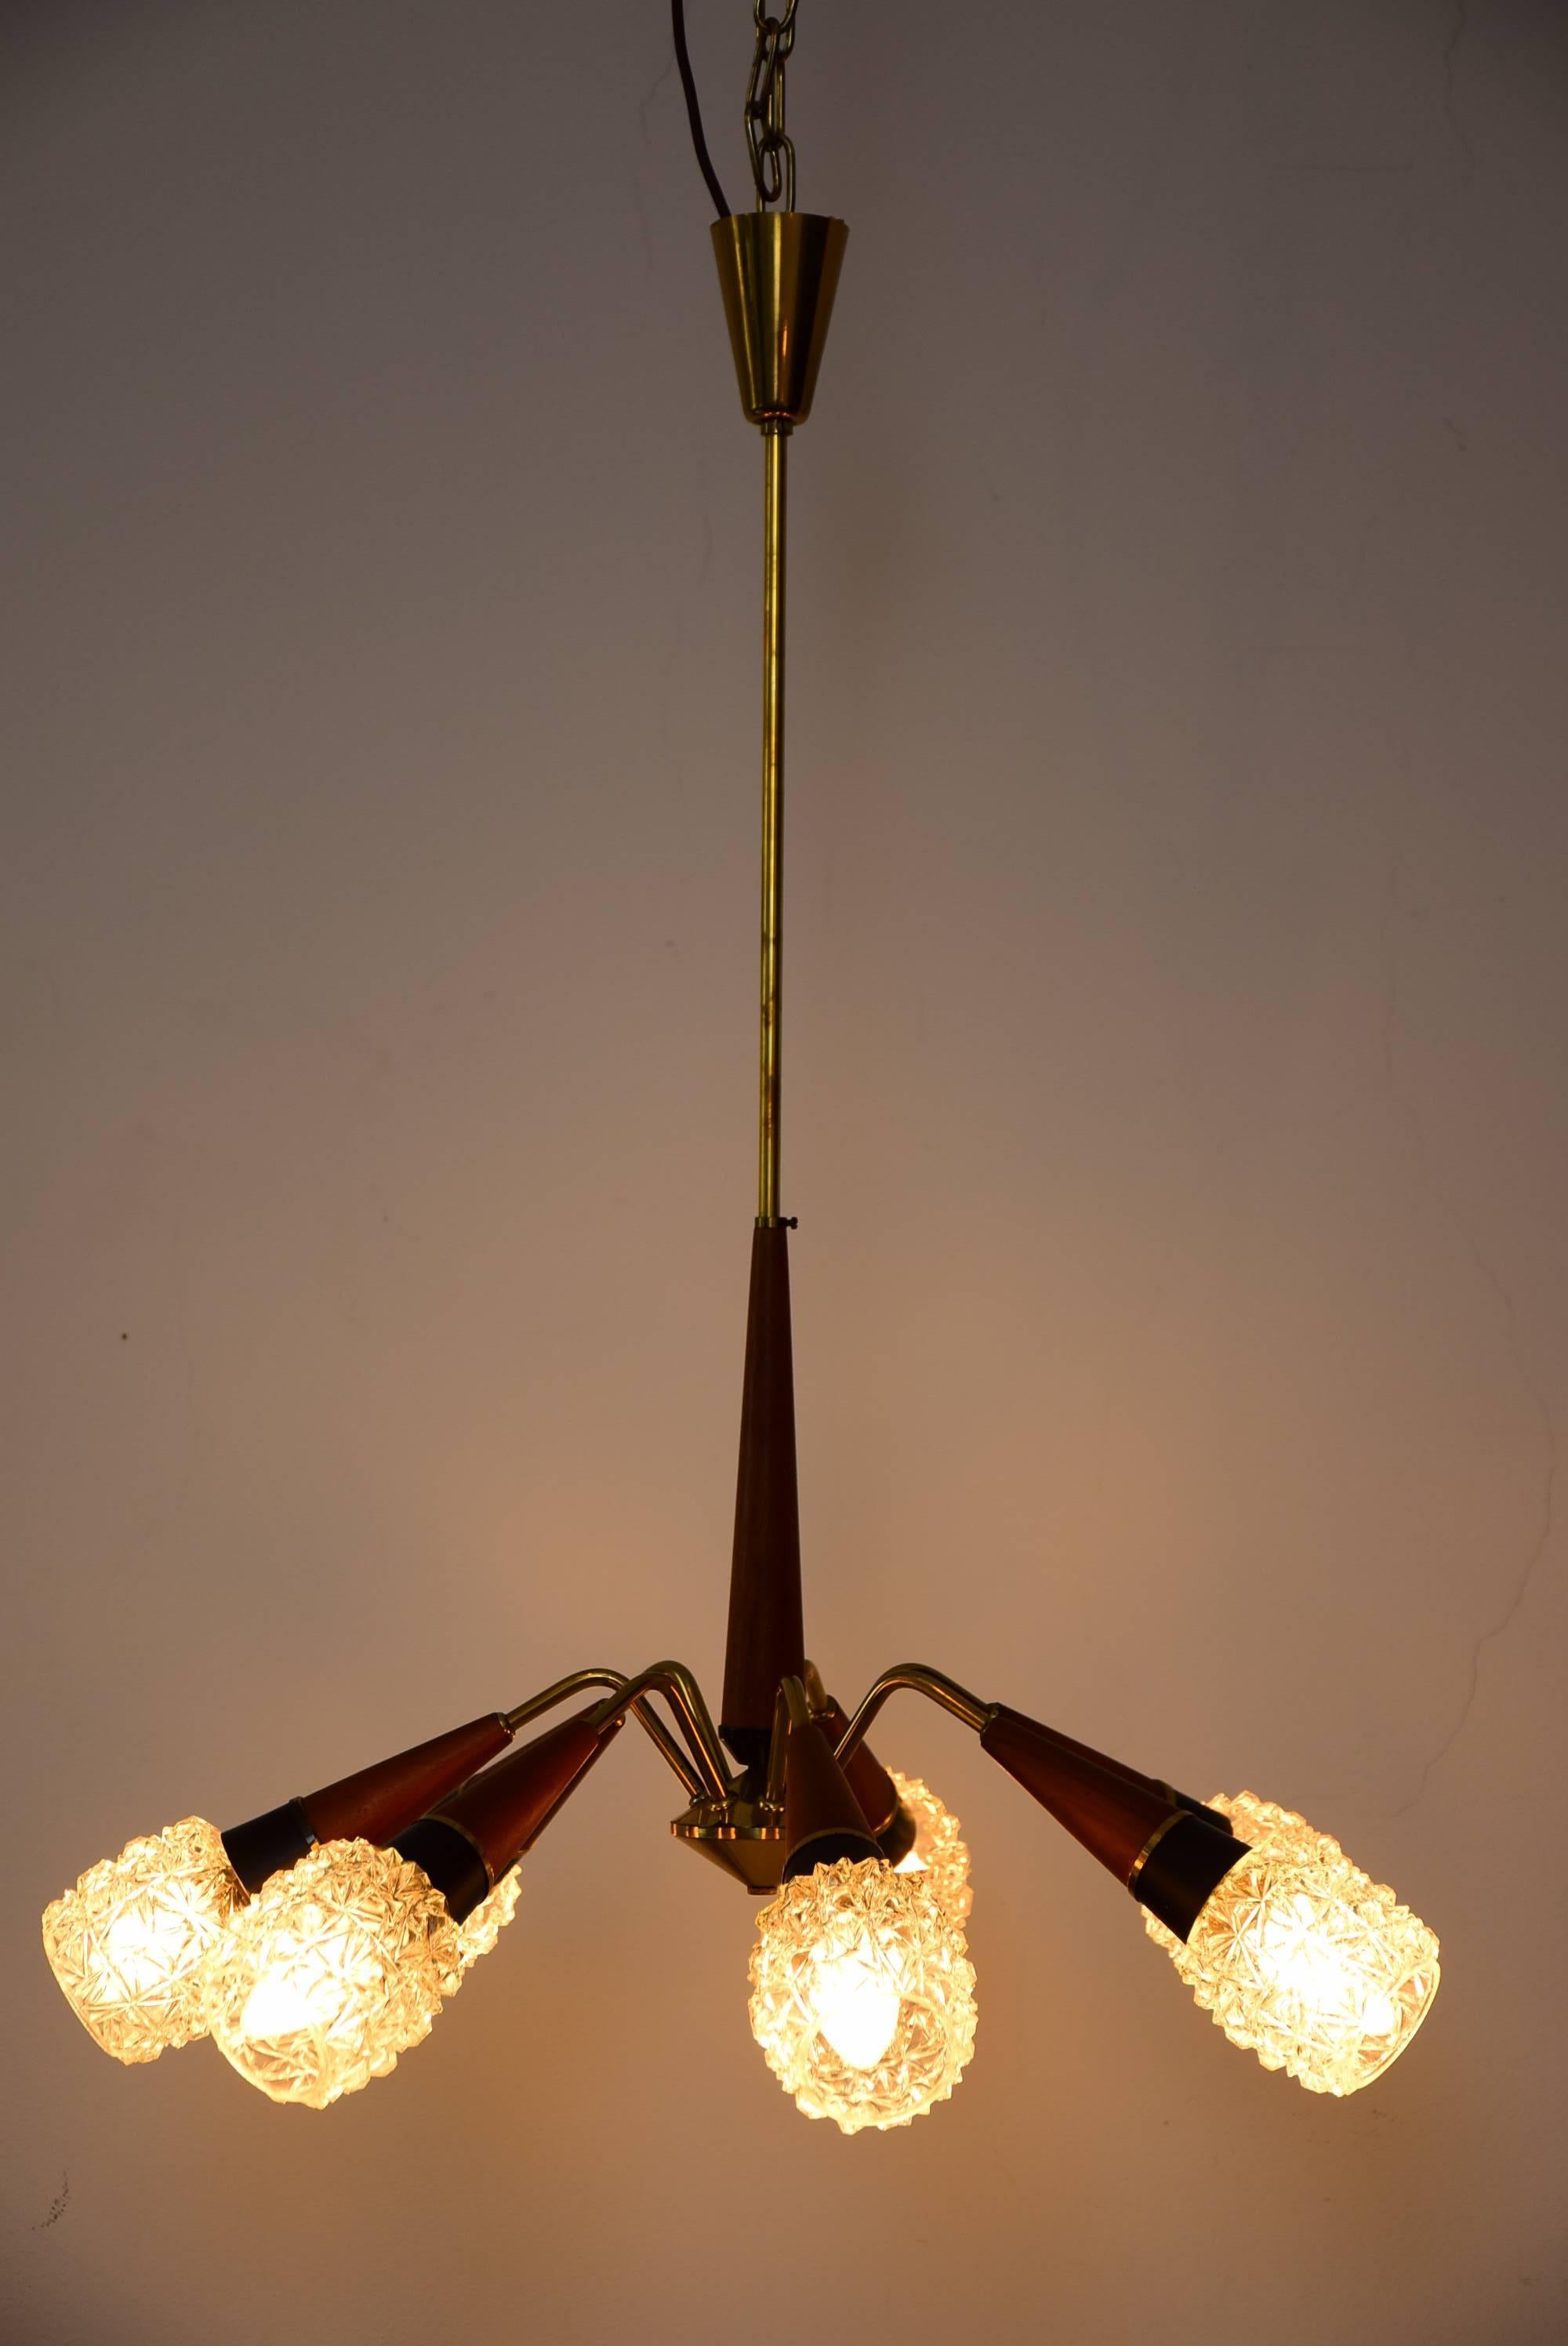 Sputnik chandelier Richard Essig style.
Original condition.
Seven arms
original glass
nutwood.